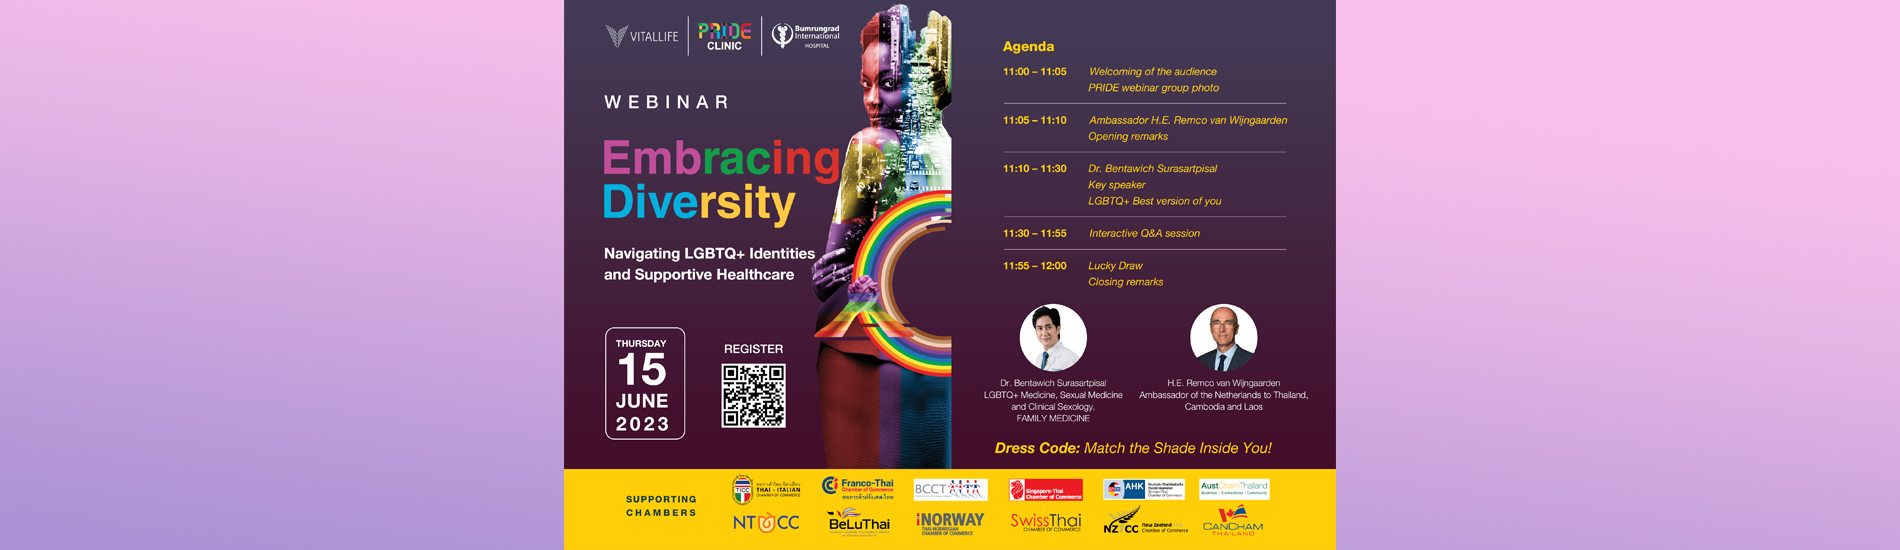 LGBTQ+ Webinar by Pride Clinic Bumrungrad